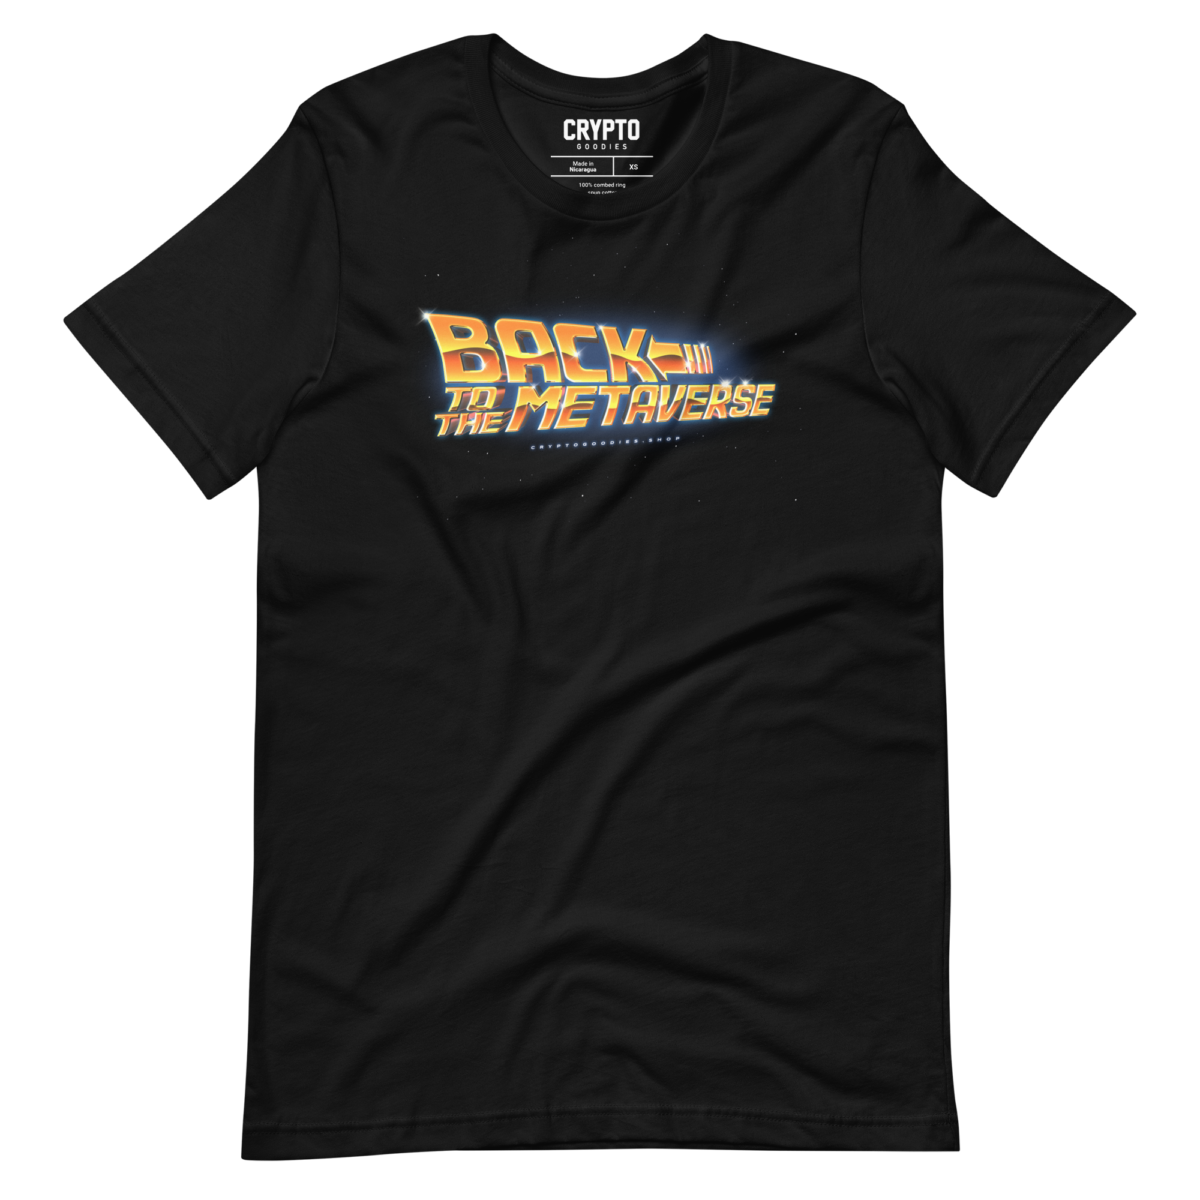 unisex staple t shirt black front 6391c70b3bcf6 - Back to the Metaverse T-Shirt